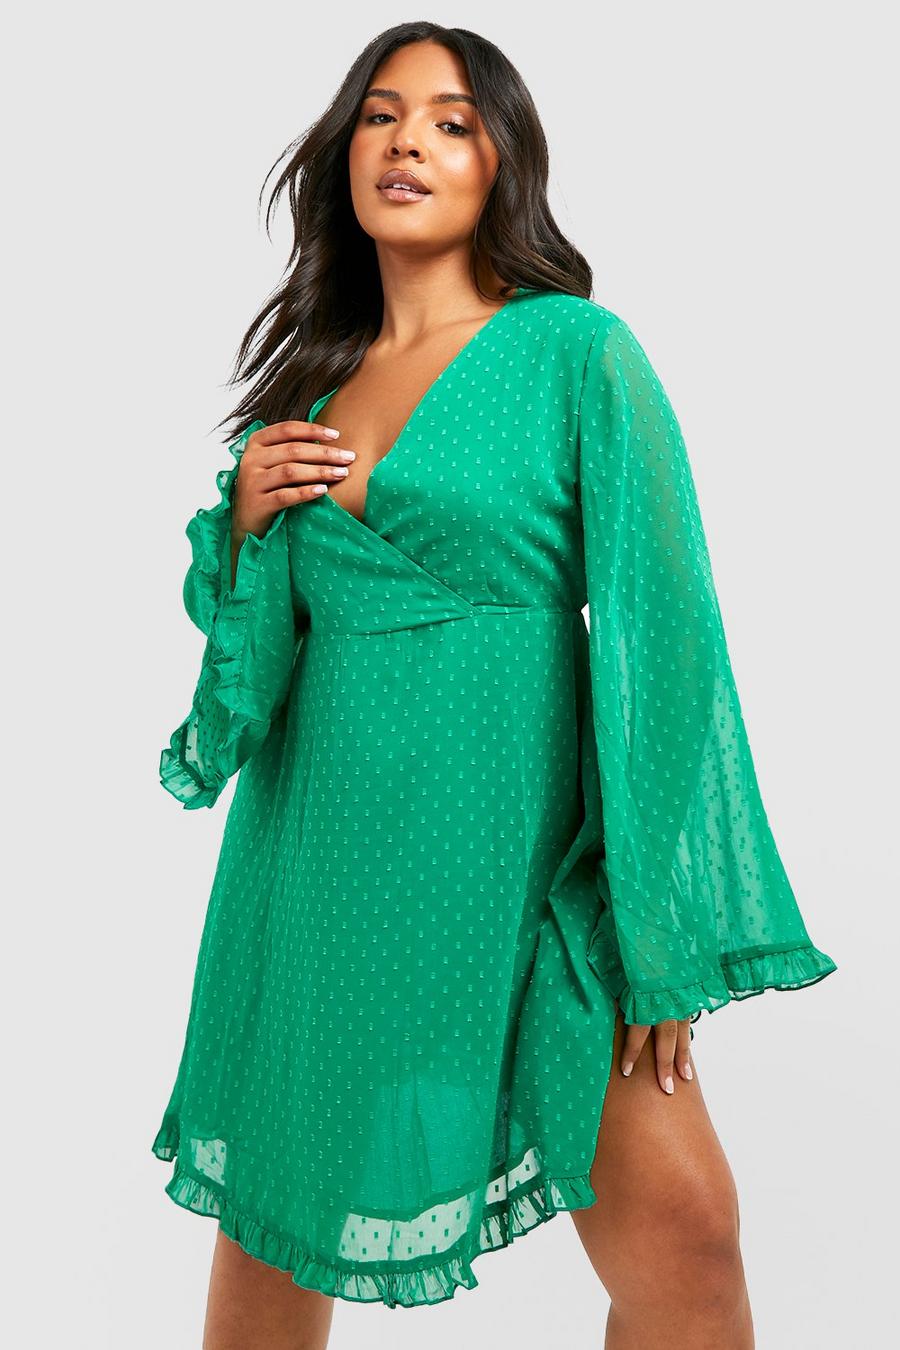 Green Dresses, Emerald, Teal & Khaki Green Dresses